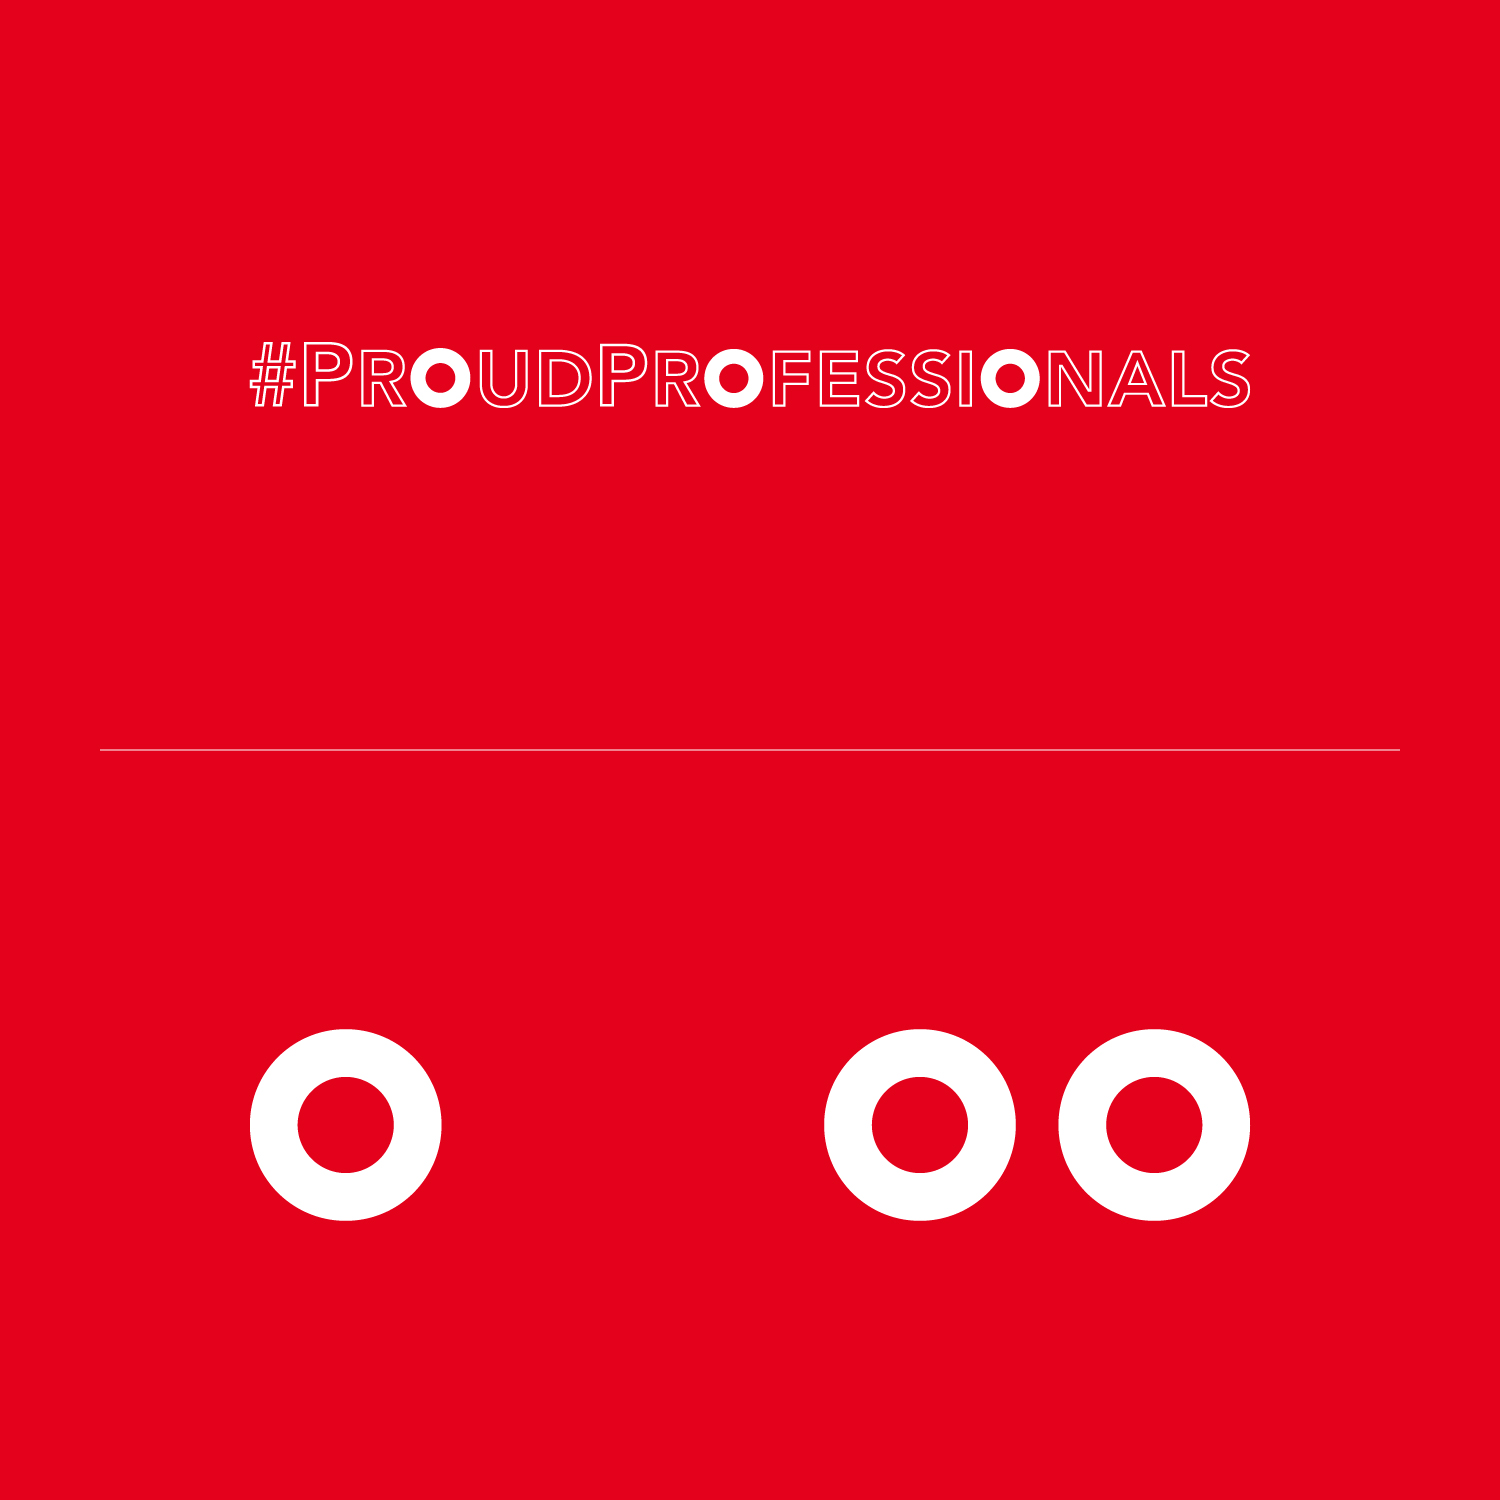 #ProudProfessionals logos